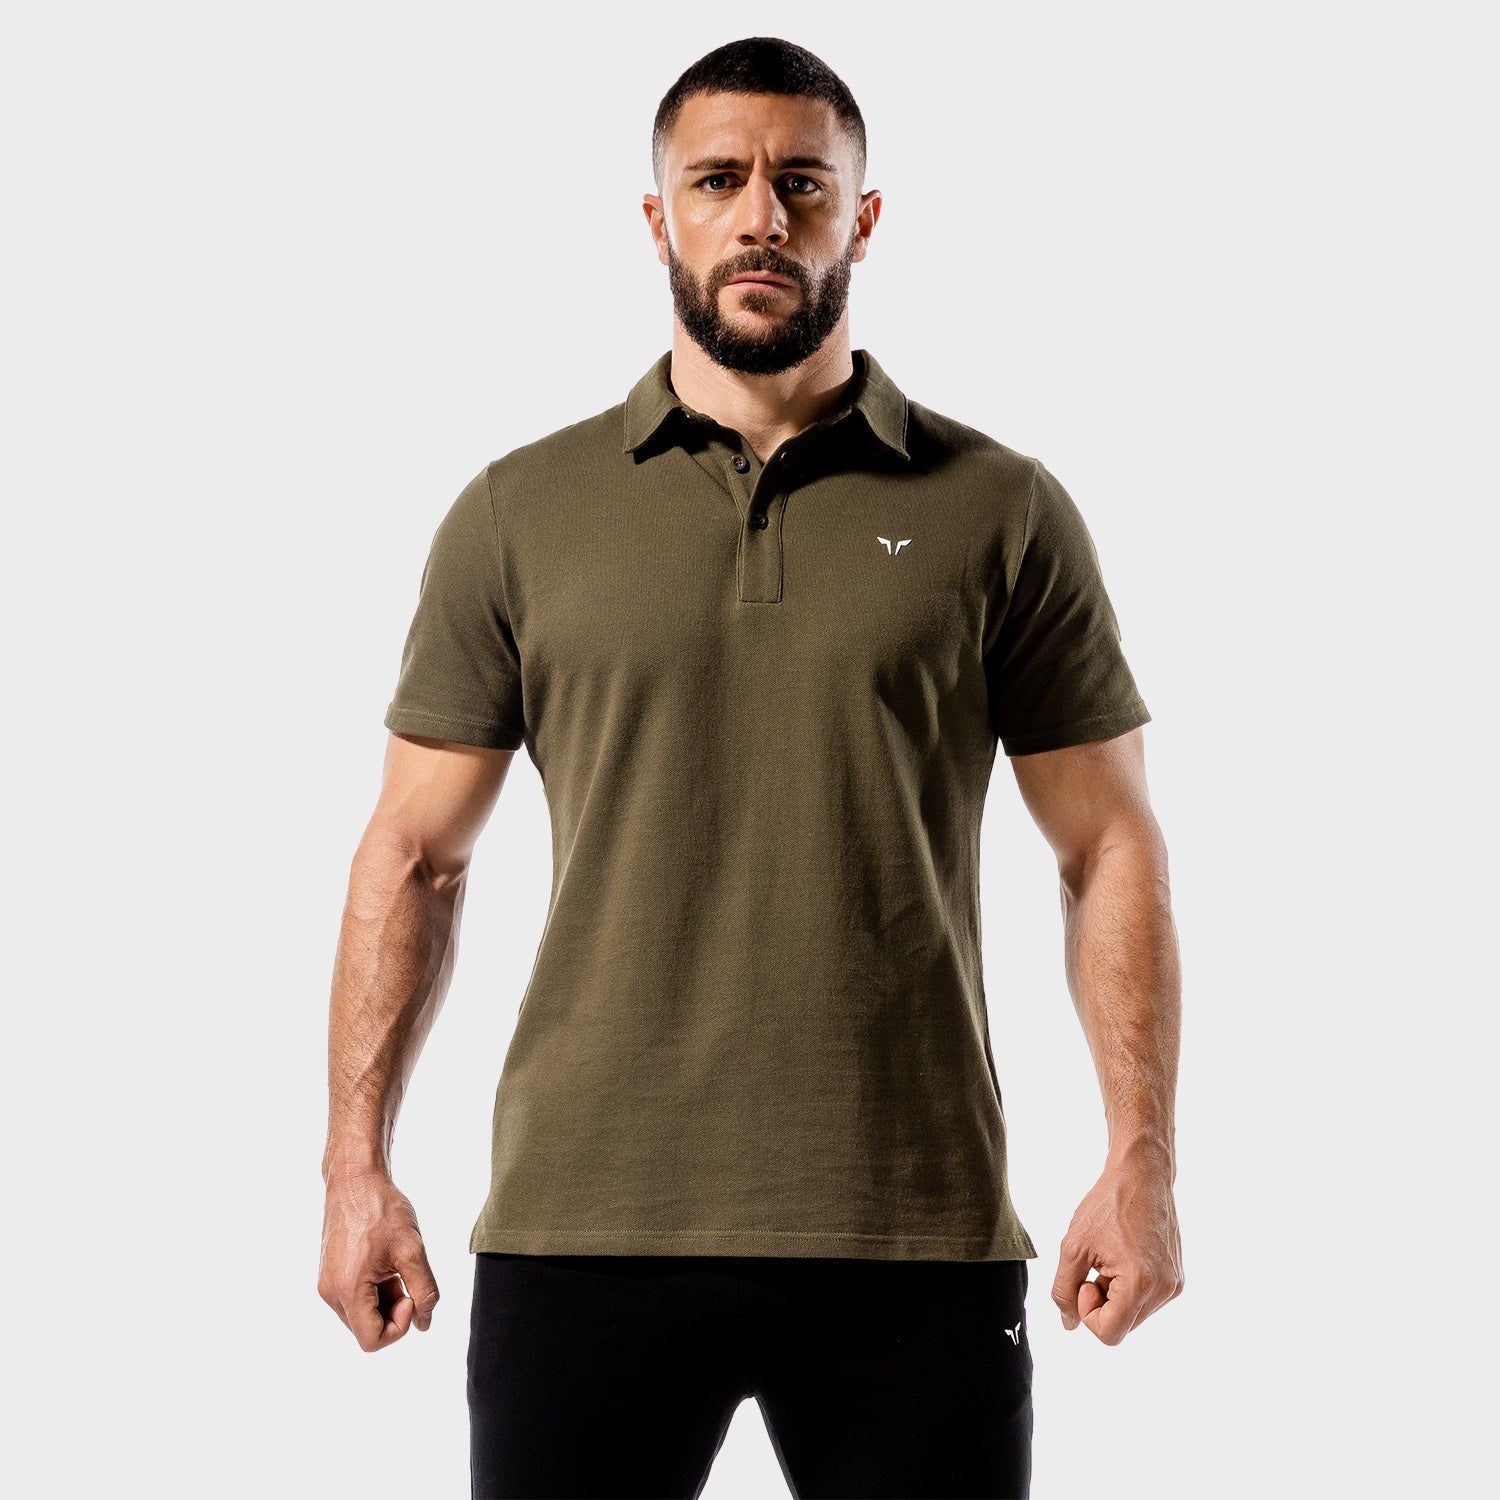 squatwolf-gym-wear-core-tee-polo-khaki-workout-shirts-for-men